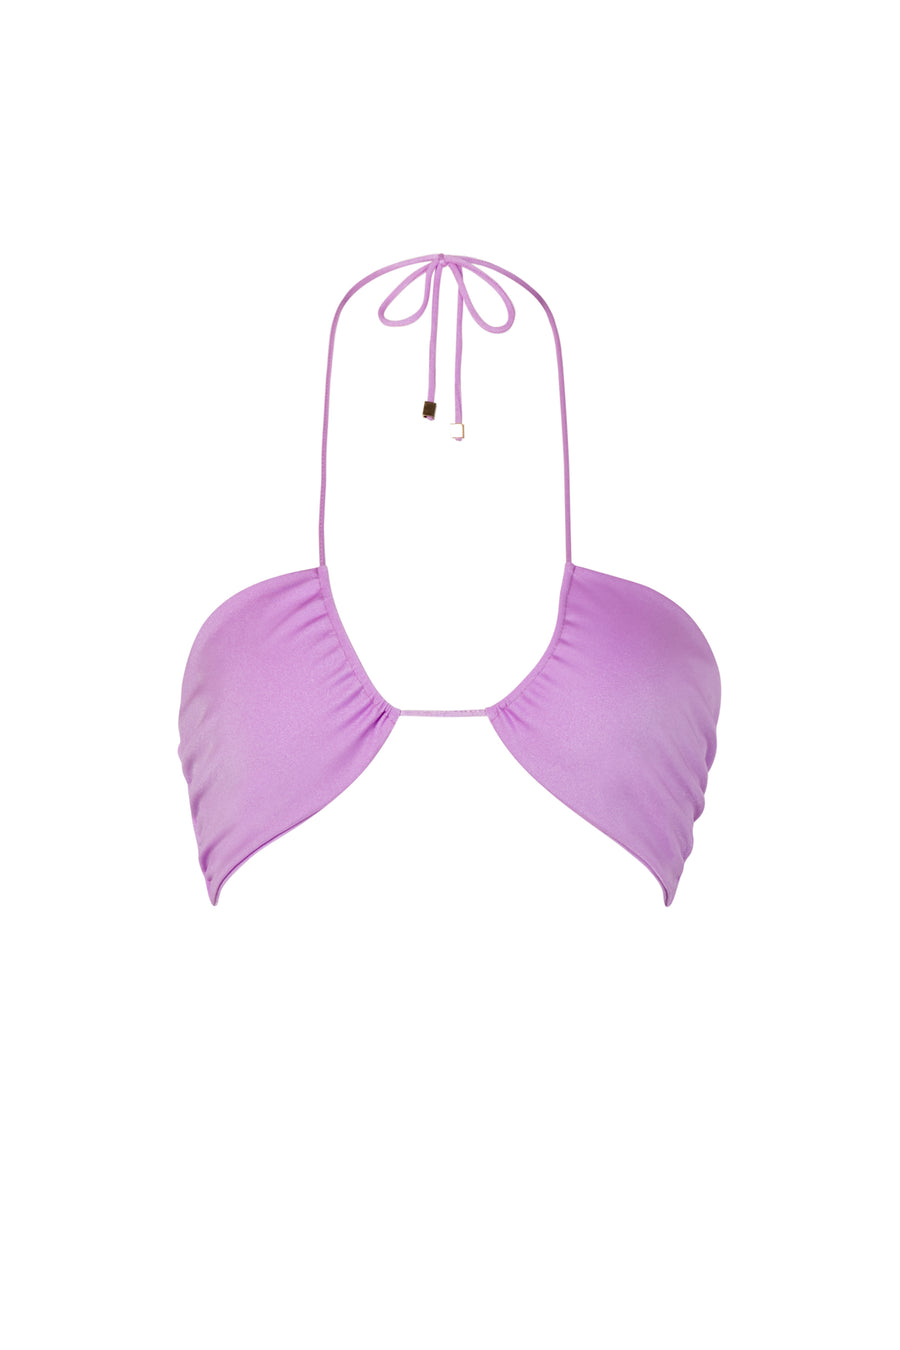 Teah Top - Shiny Lilac